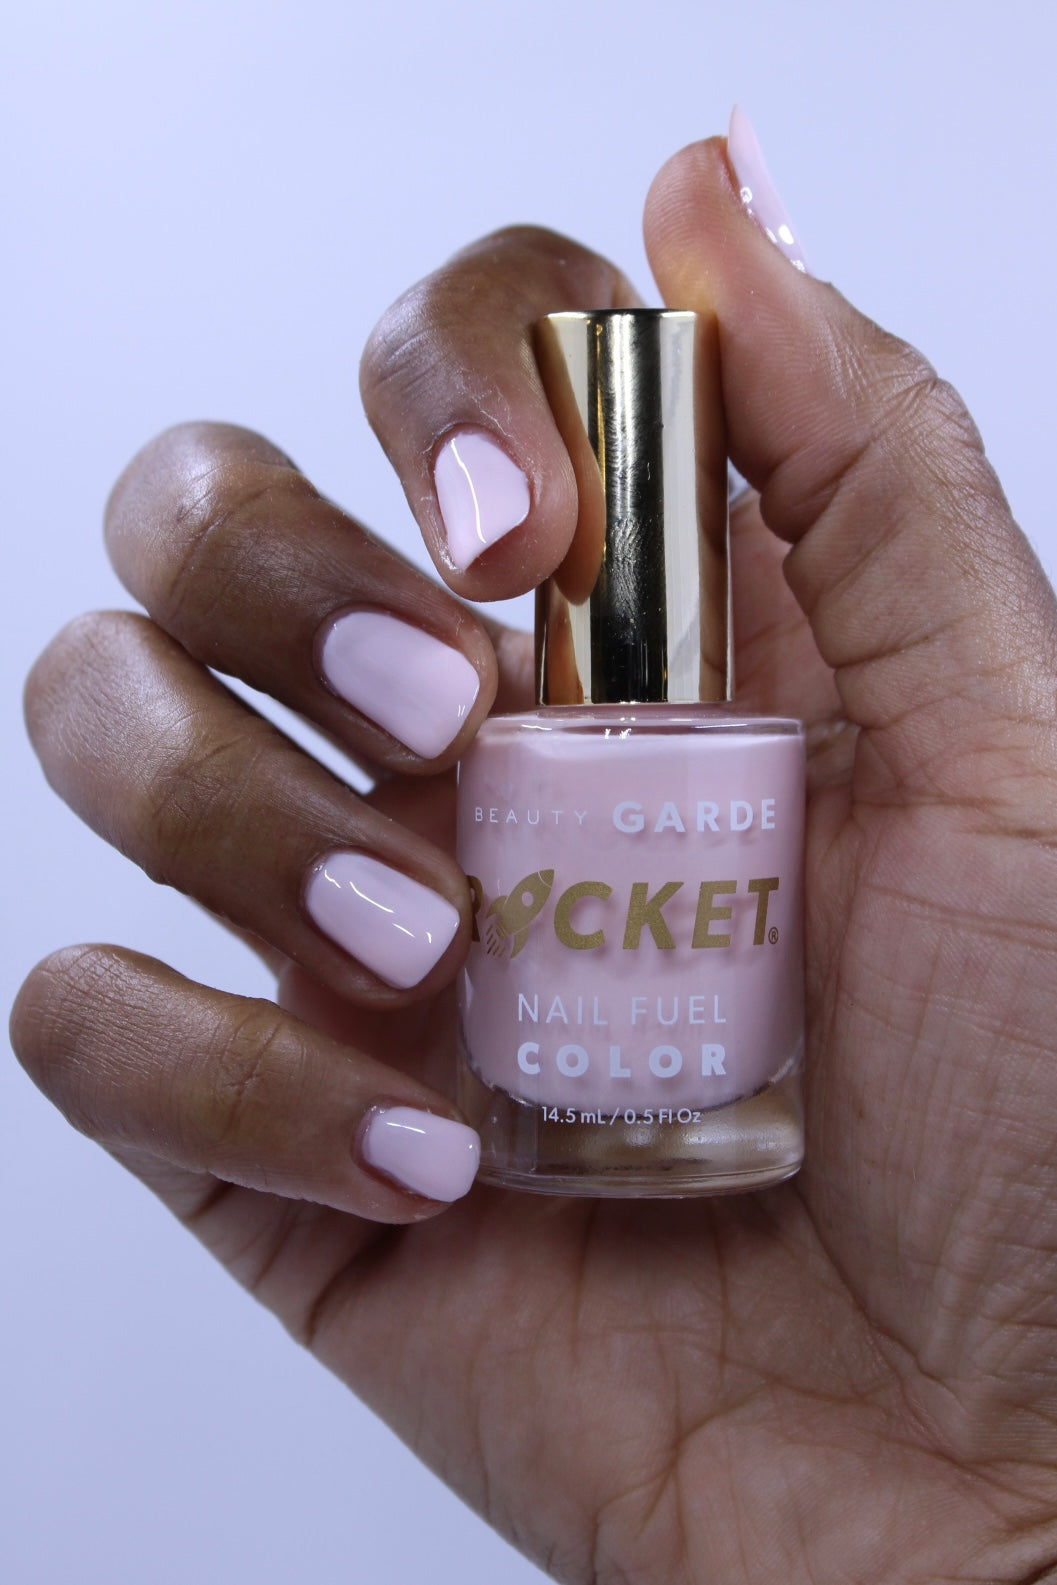 Rocket Nail Color - Ballet Pink